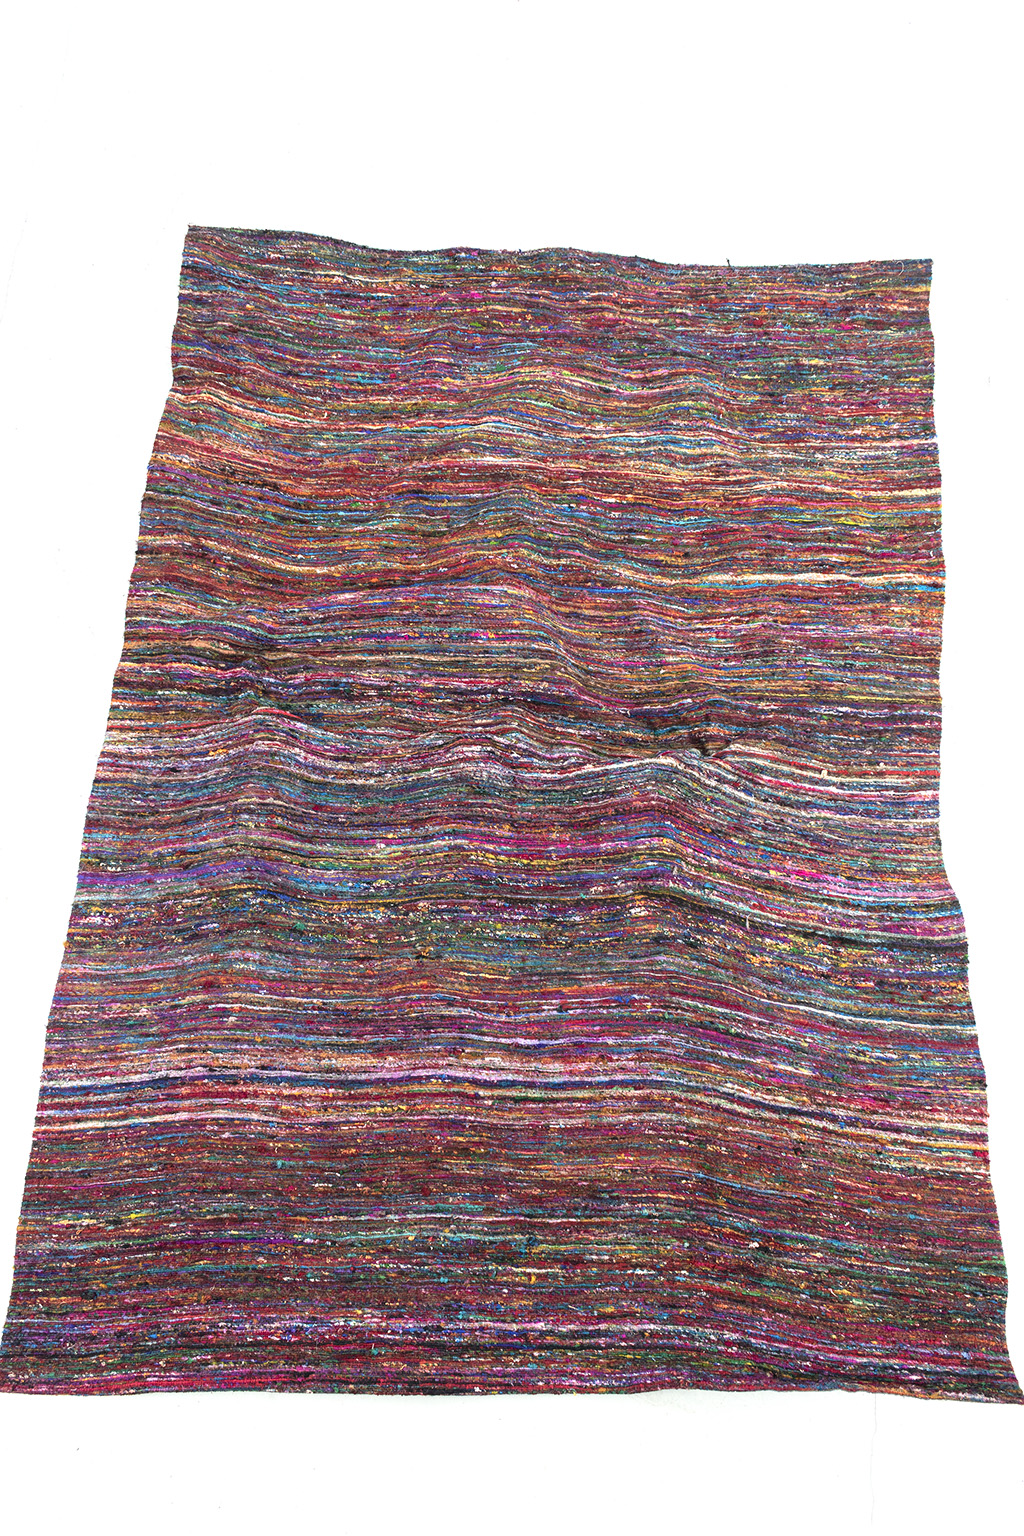 Handmade carpet from Rocaflor